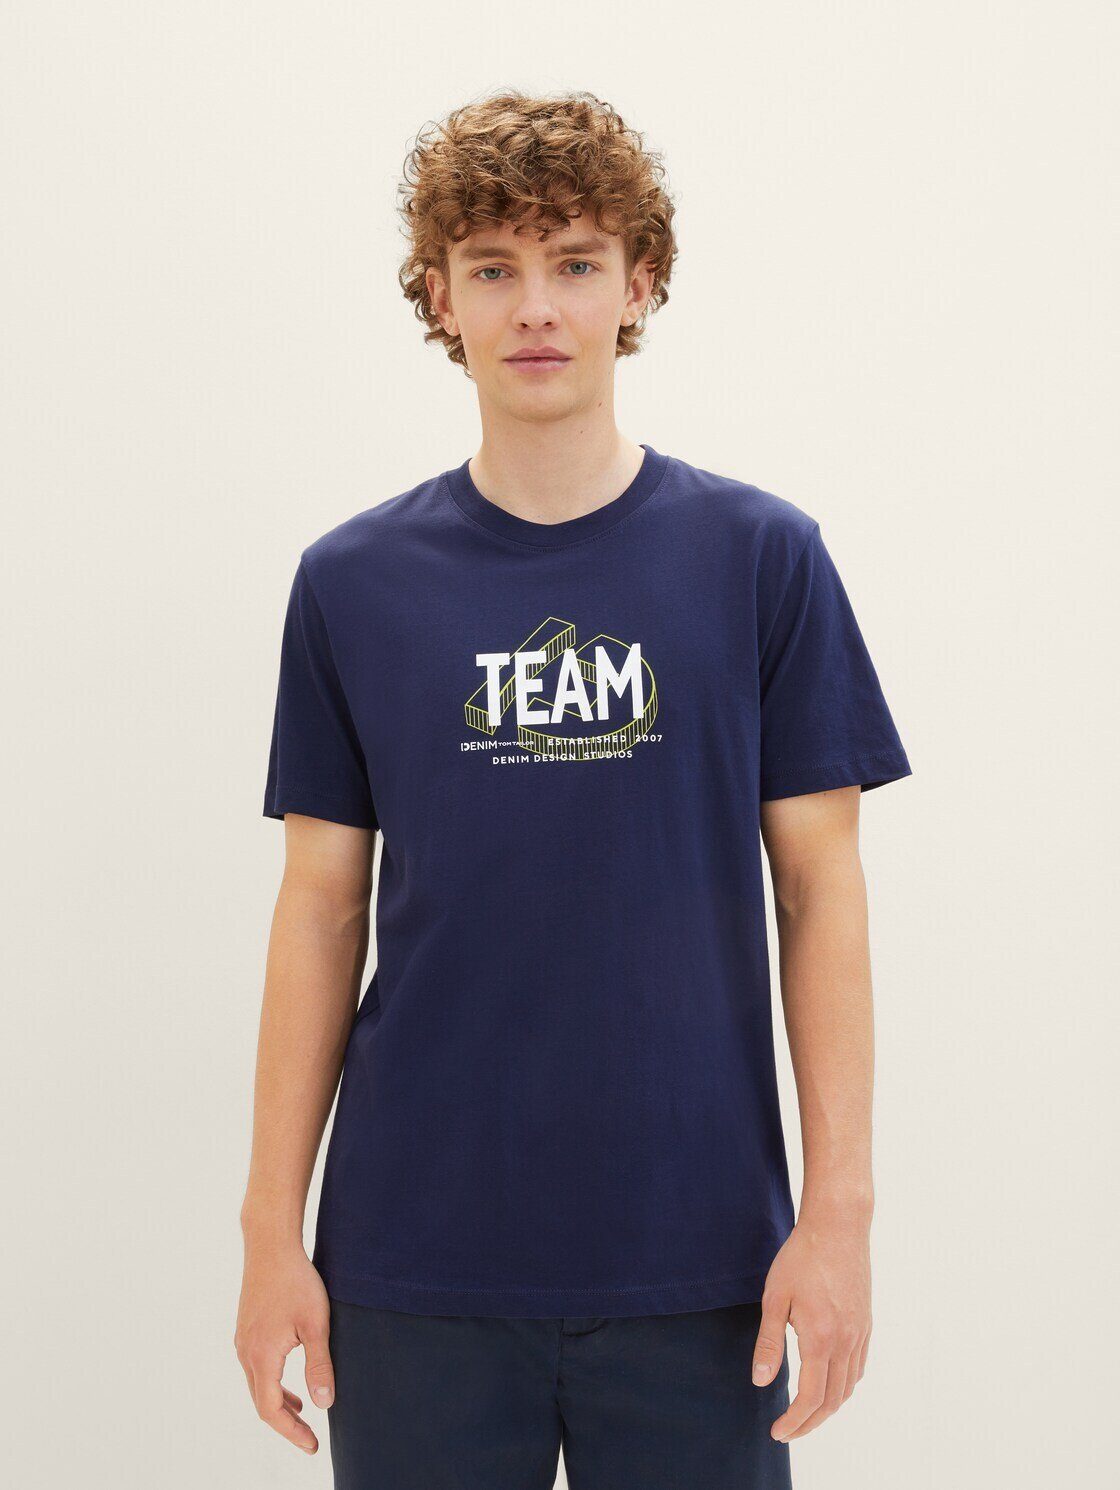 TOM TAILOR Denim T-Shirt T-Shirt mit Print dark blueberry